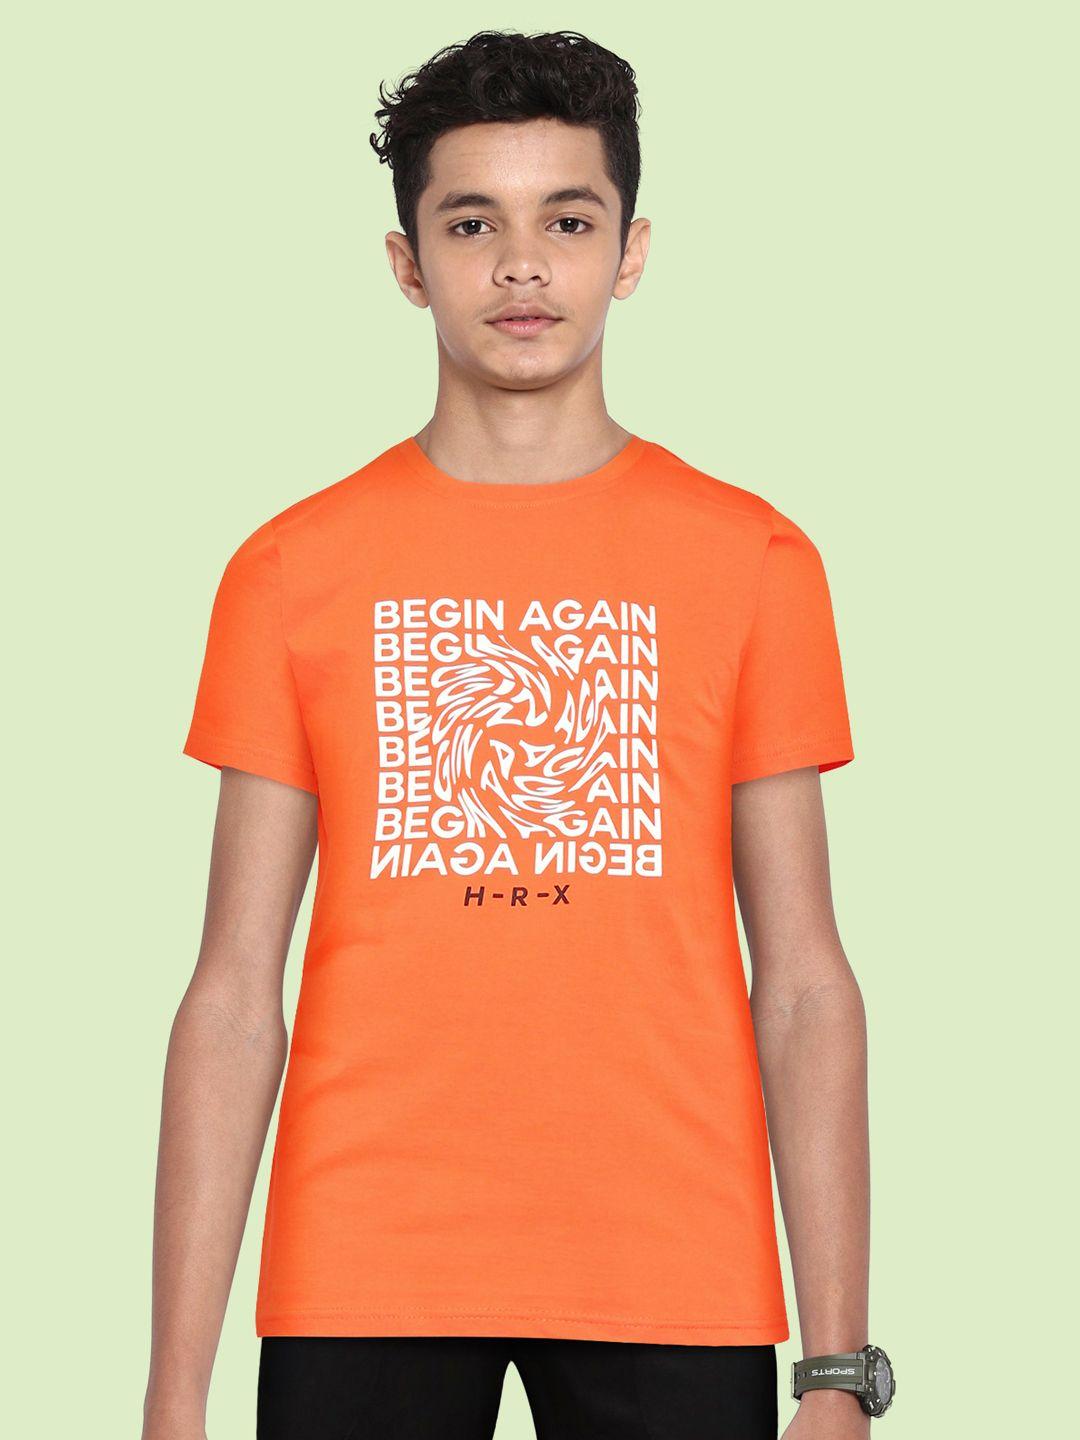 hrx by hrithik roshan lifestyle boys orangade bio-wash typography tshirts